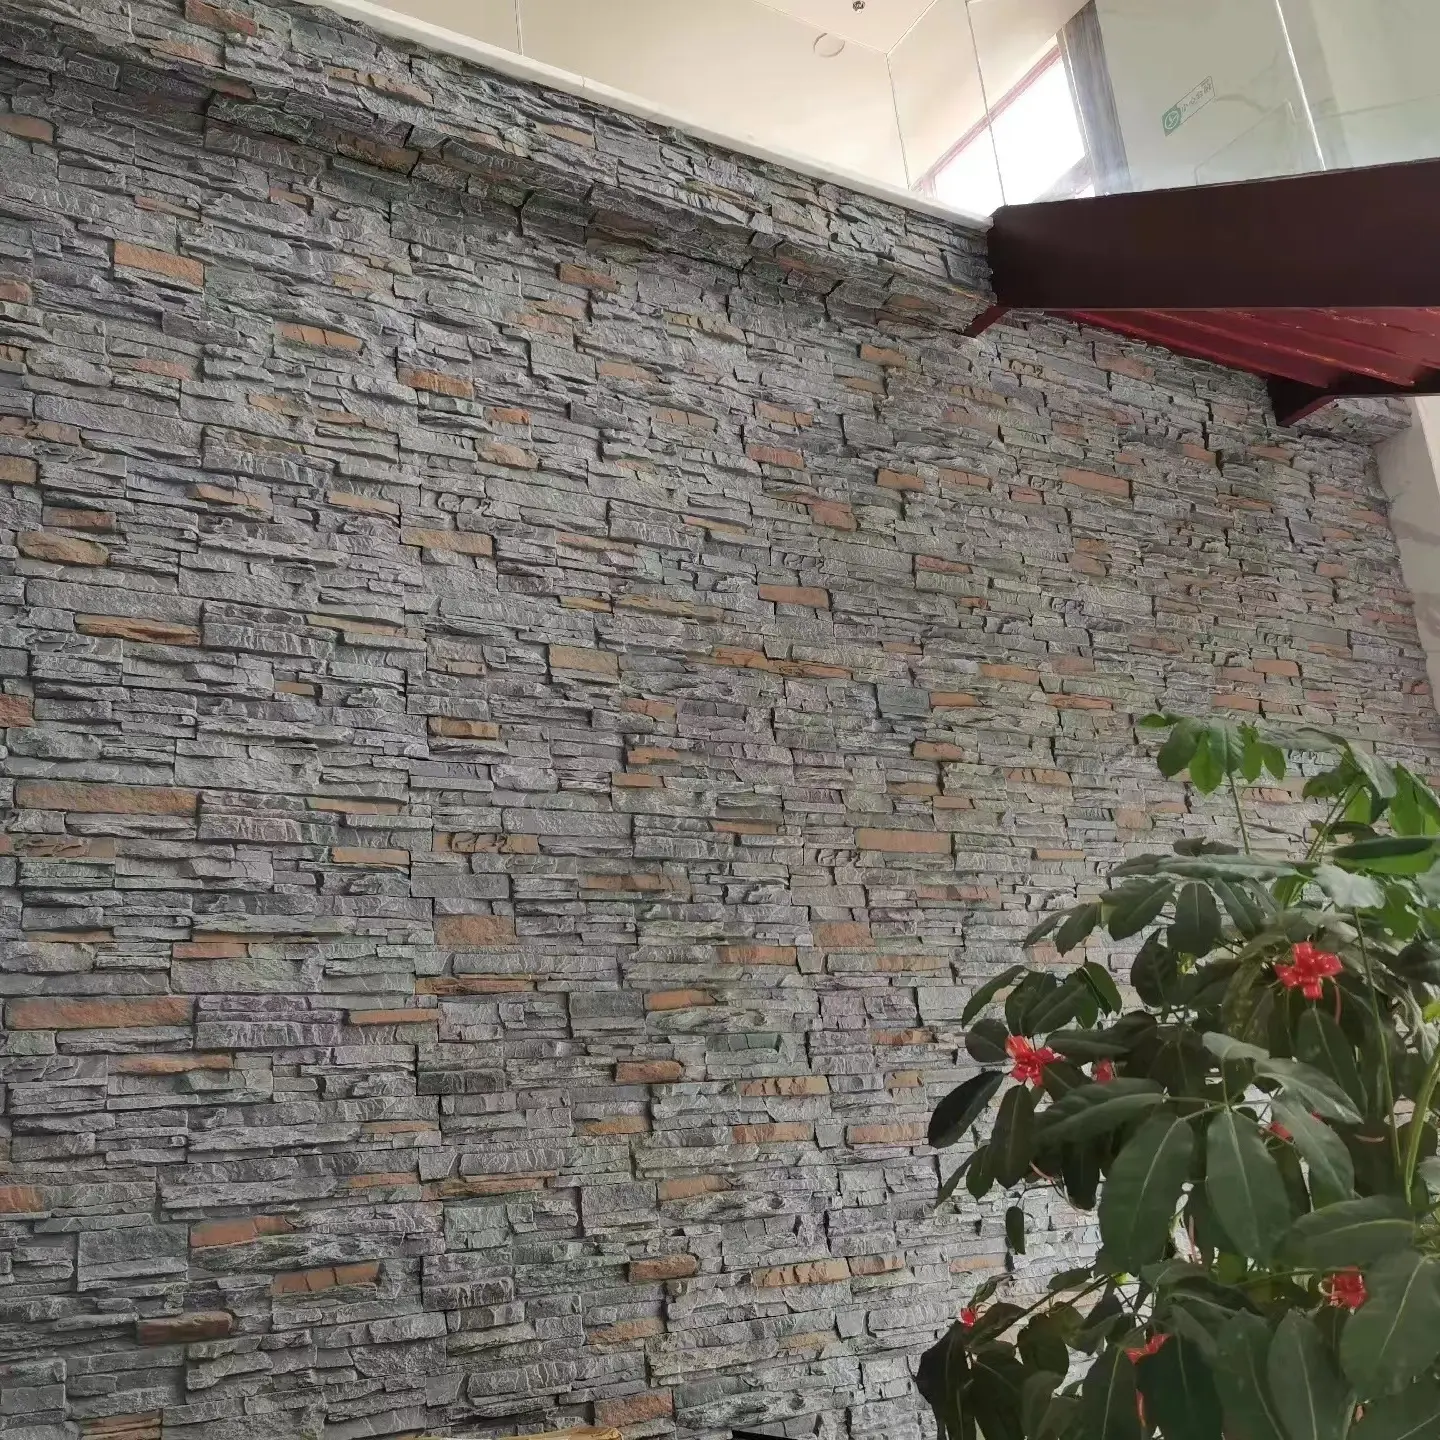 NEU PUスタックストーンパネルクラッディングサイディングフェイクロックパネルホワイトクォーツ壁装飾石卸売用ロックウォールパネル